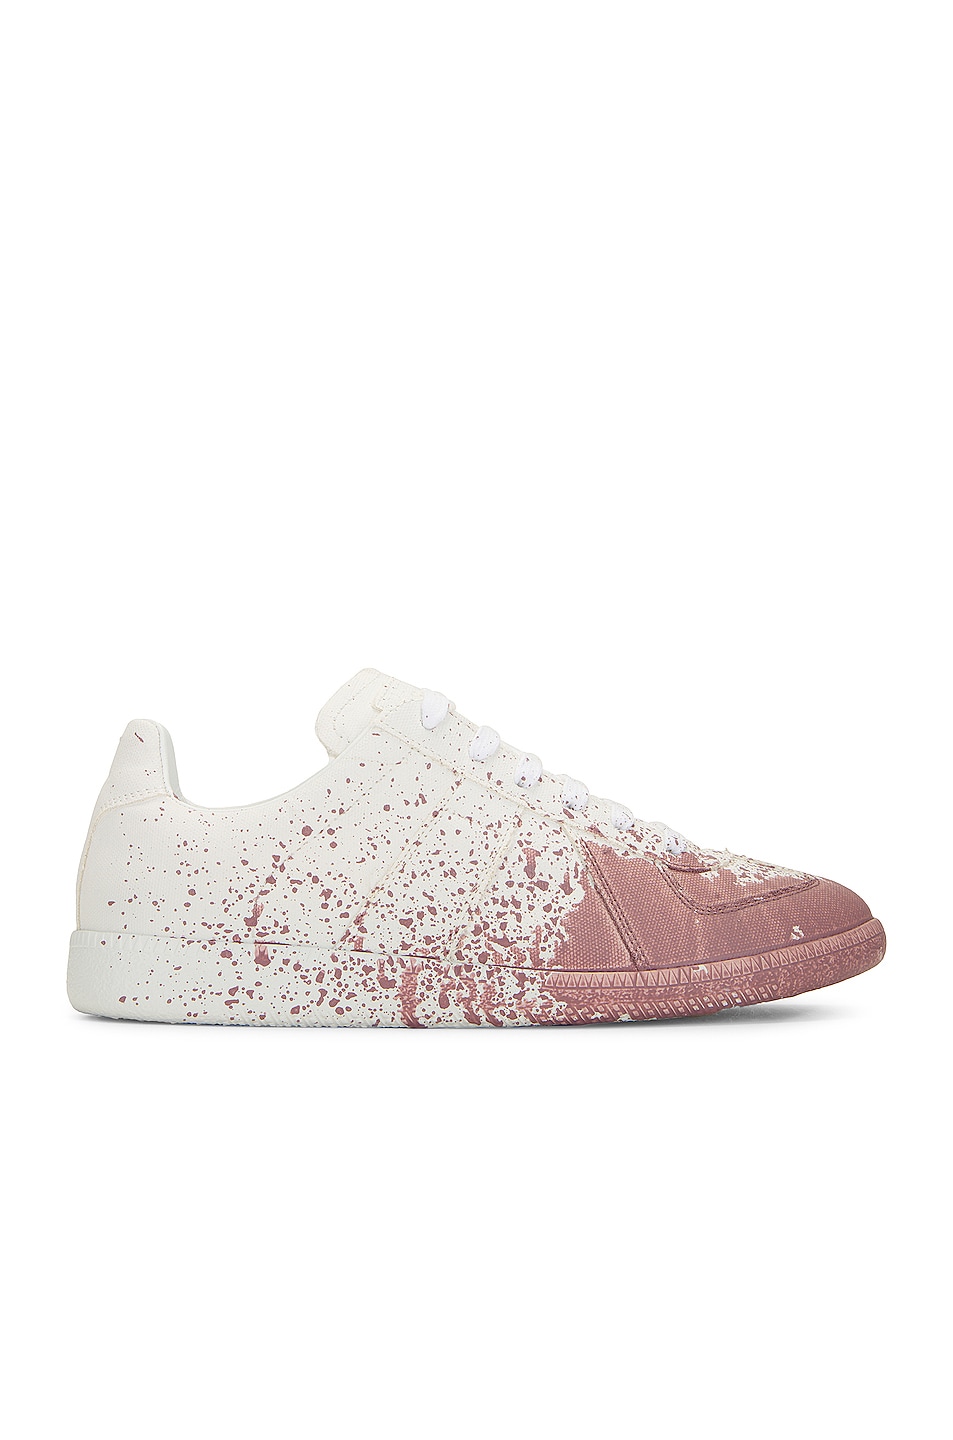 Image 1 of Maison Margiela Replica Painter Low Sneaker in White & Roseate